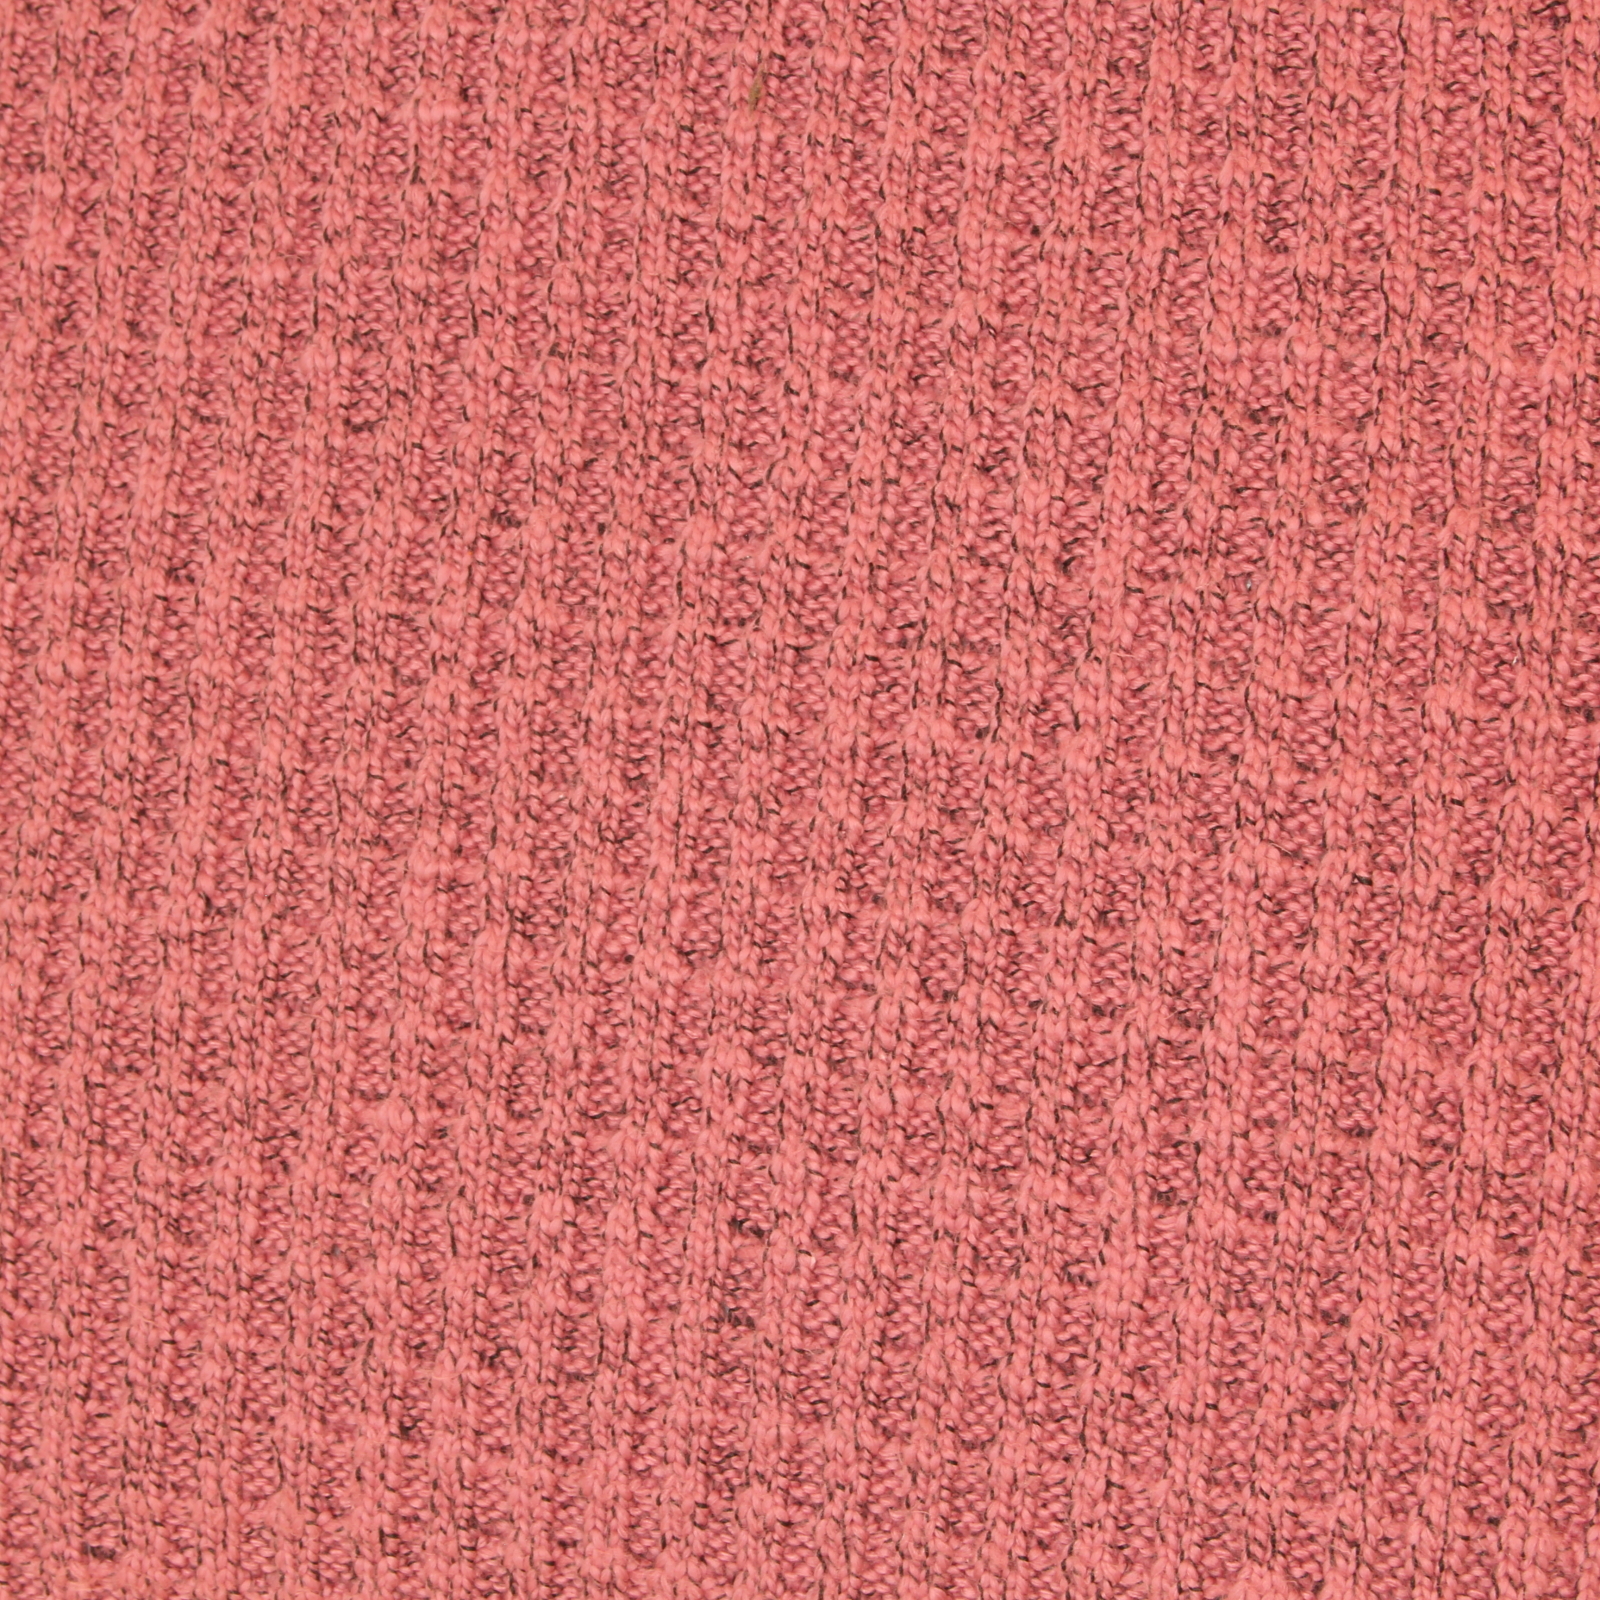 Kissenbezug Strick Knitted Altrosa-30x30 cm